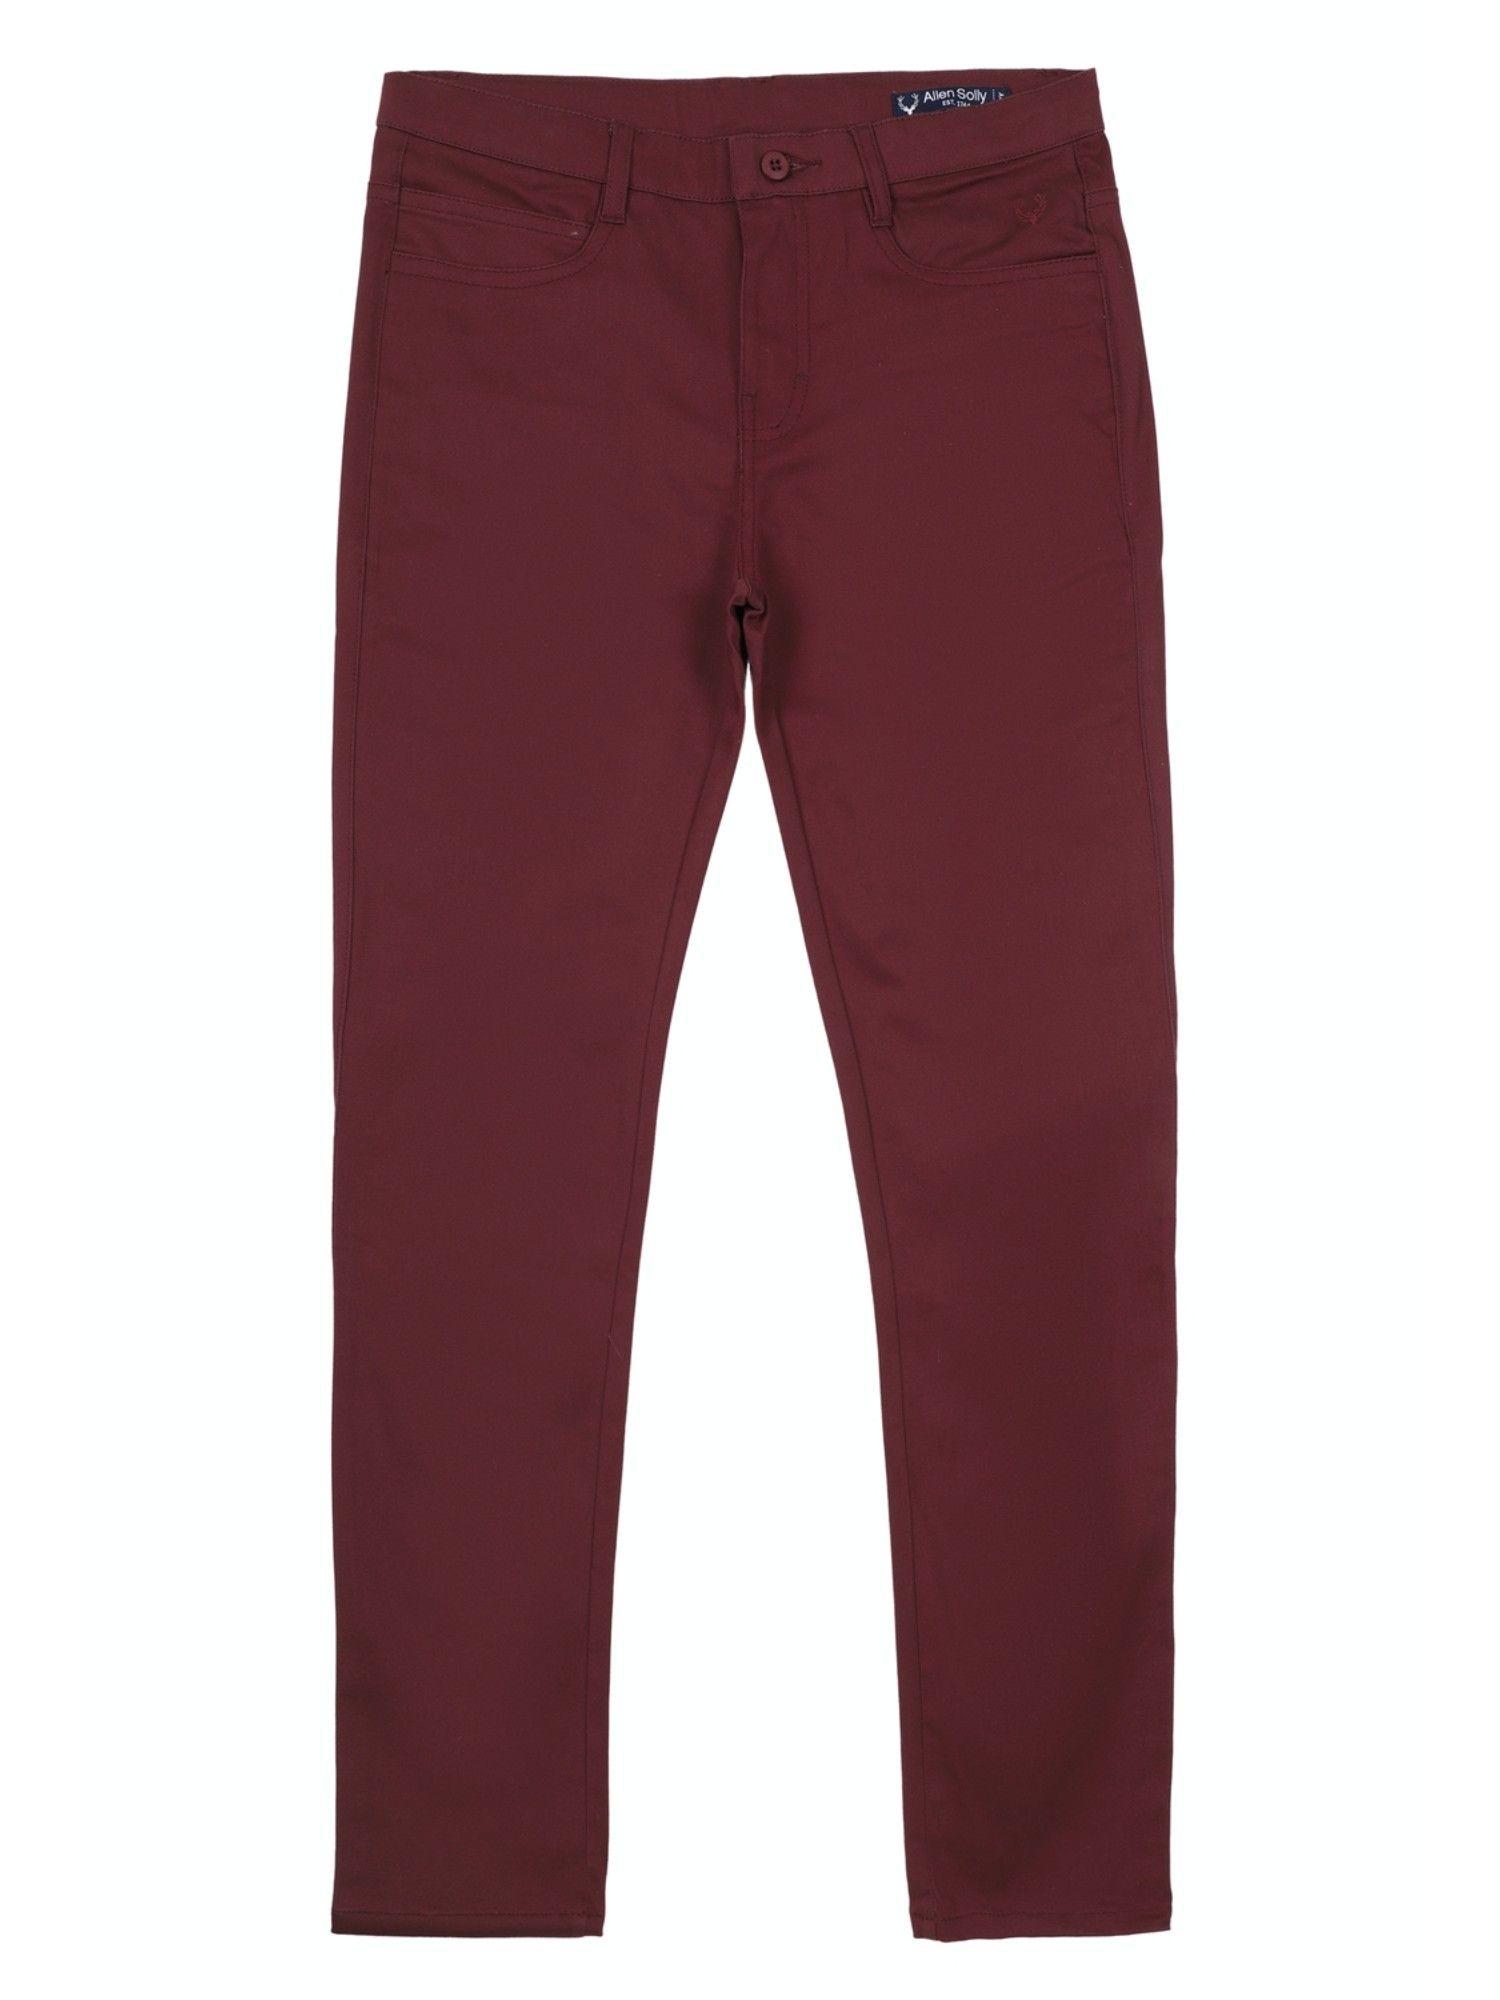 boys-maroon-plain-trousers